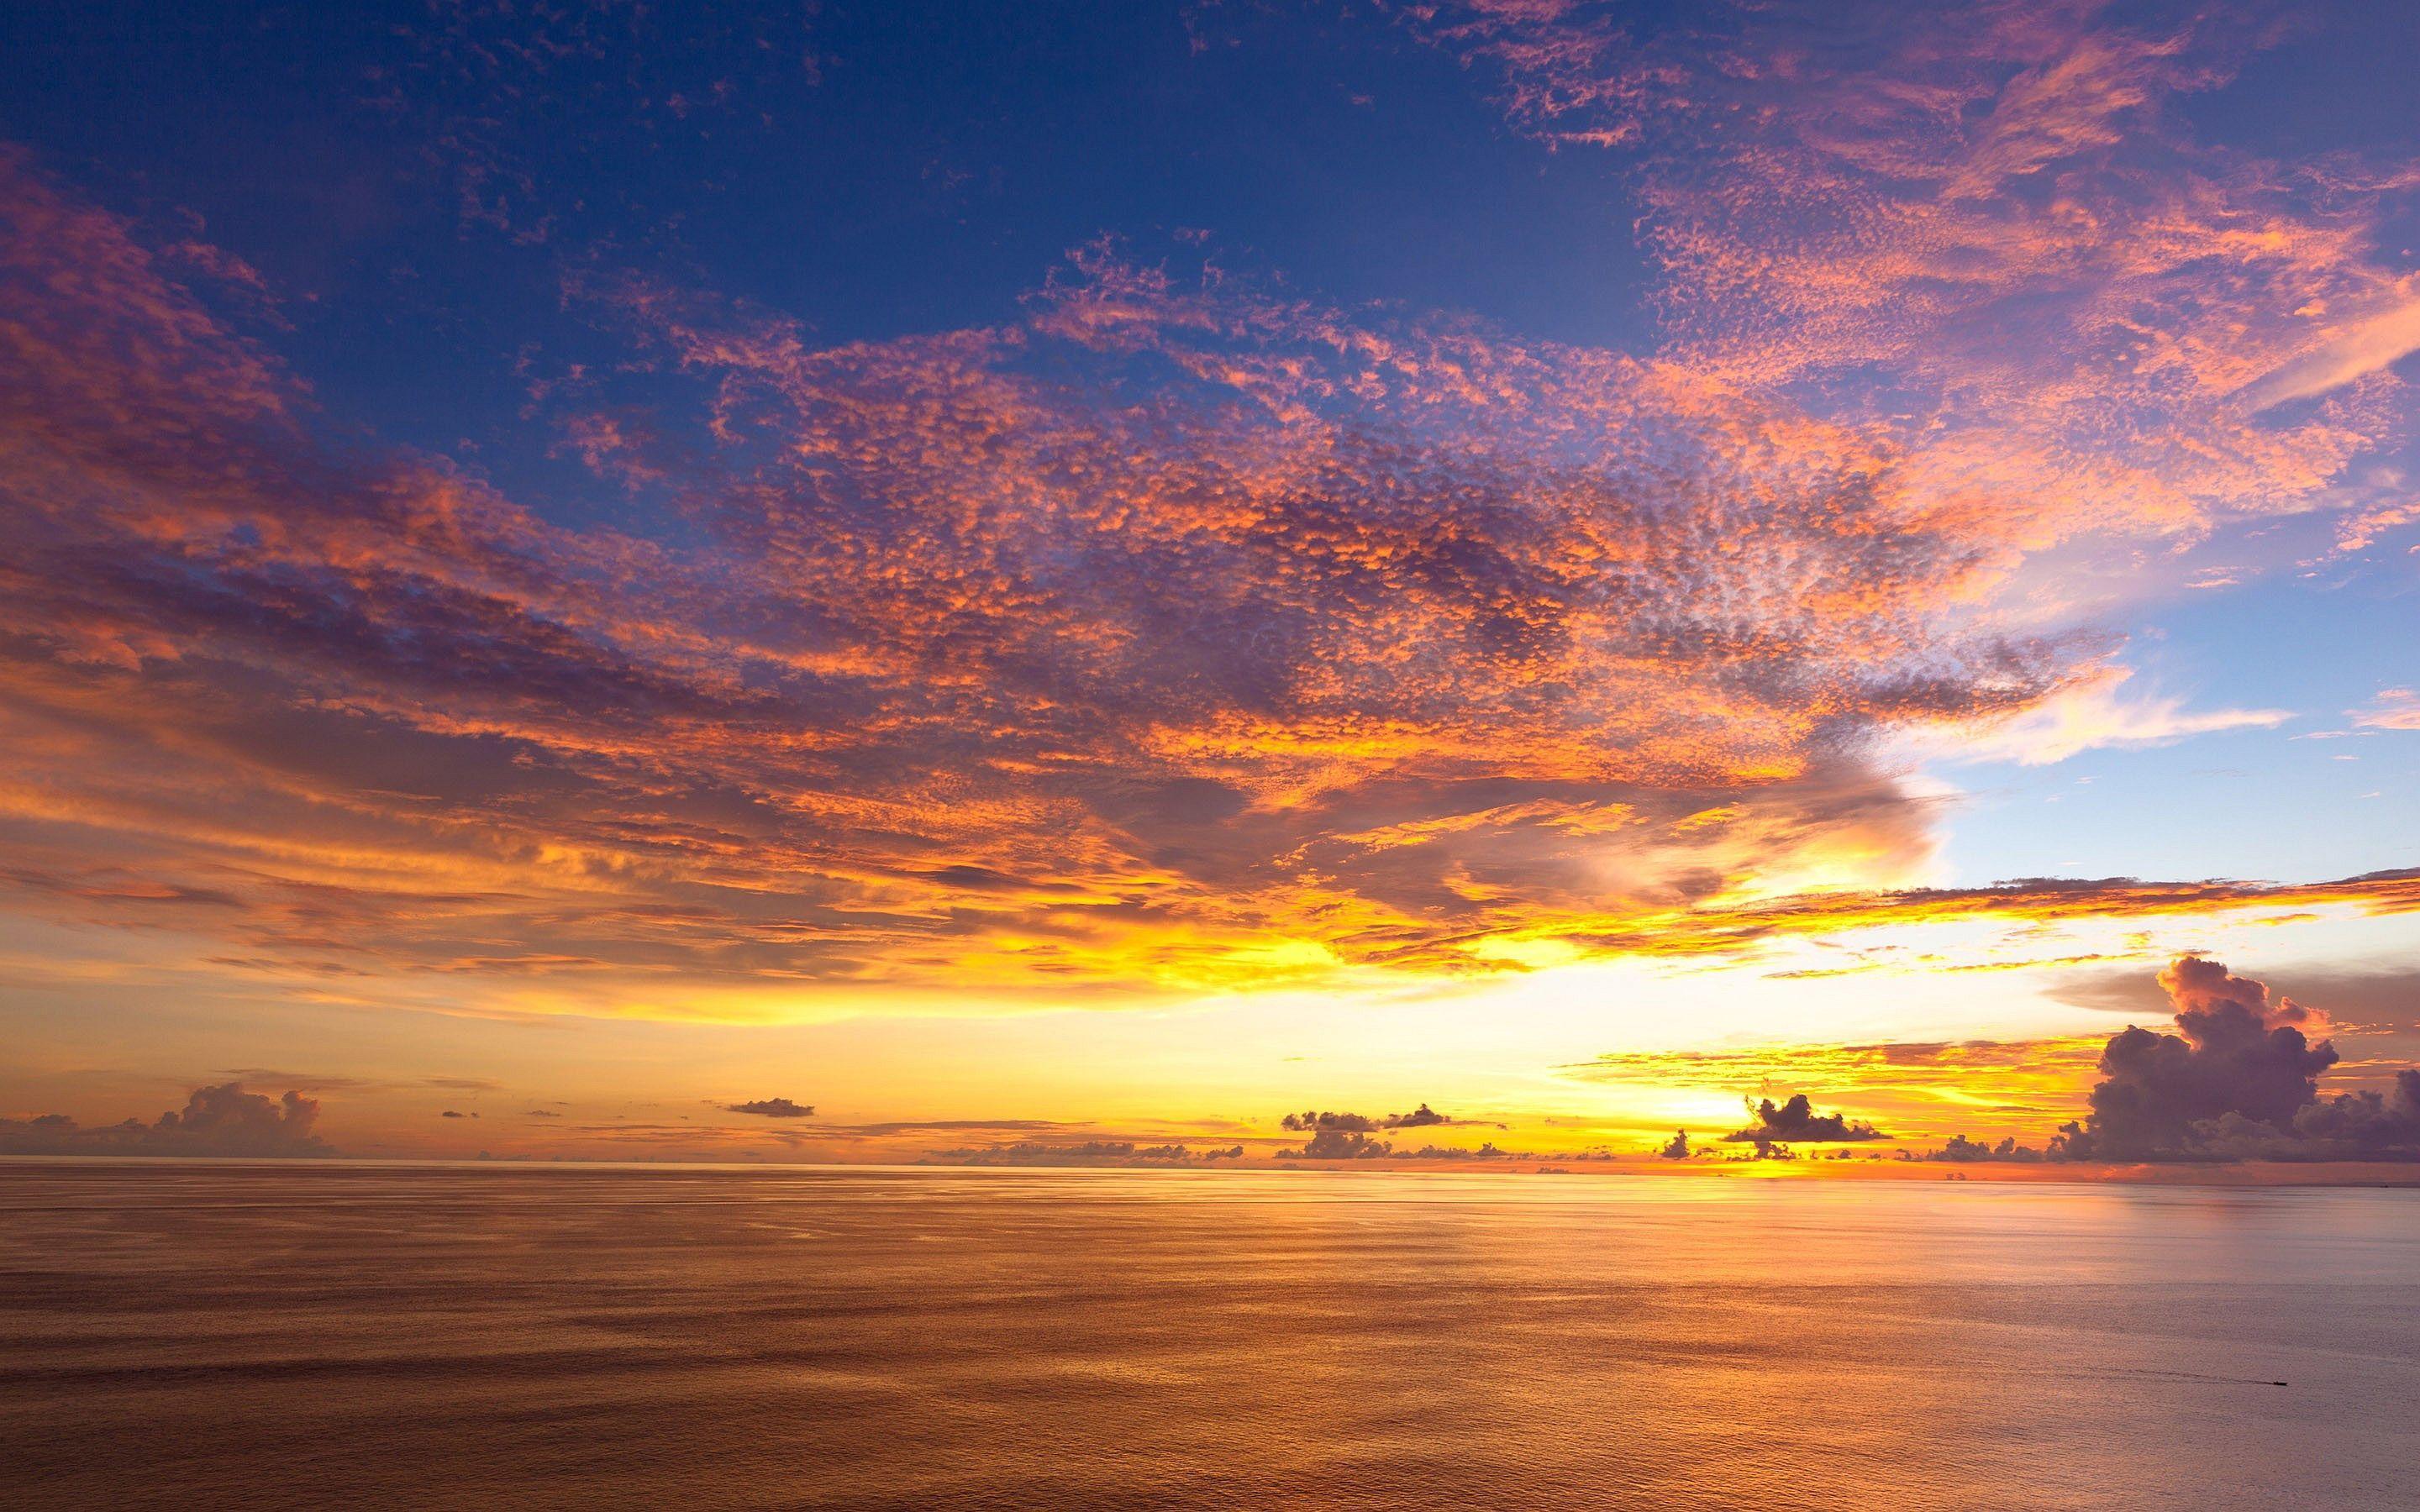 horizon. Ocean sunset horizon Wallpaper Picture Photo Image